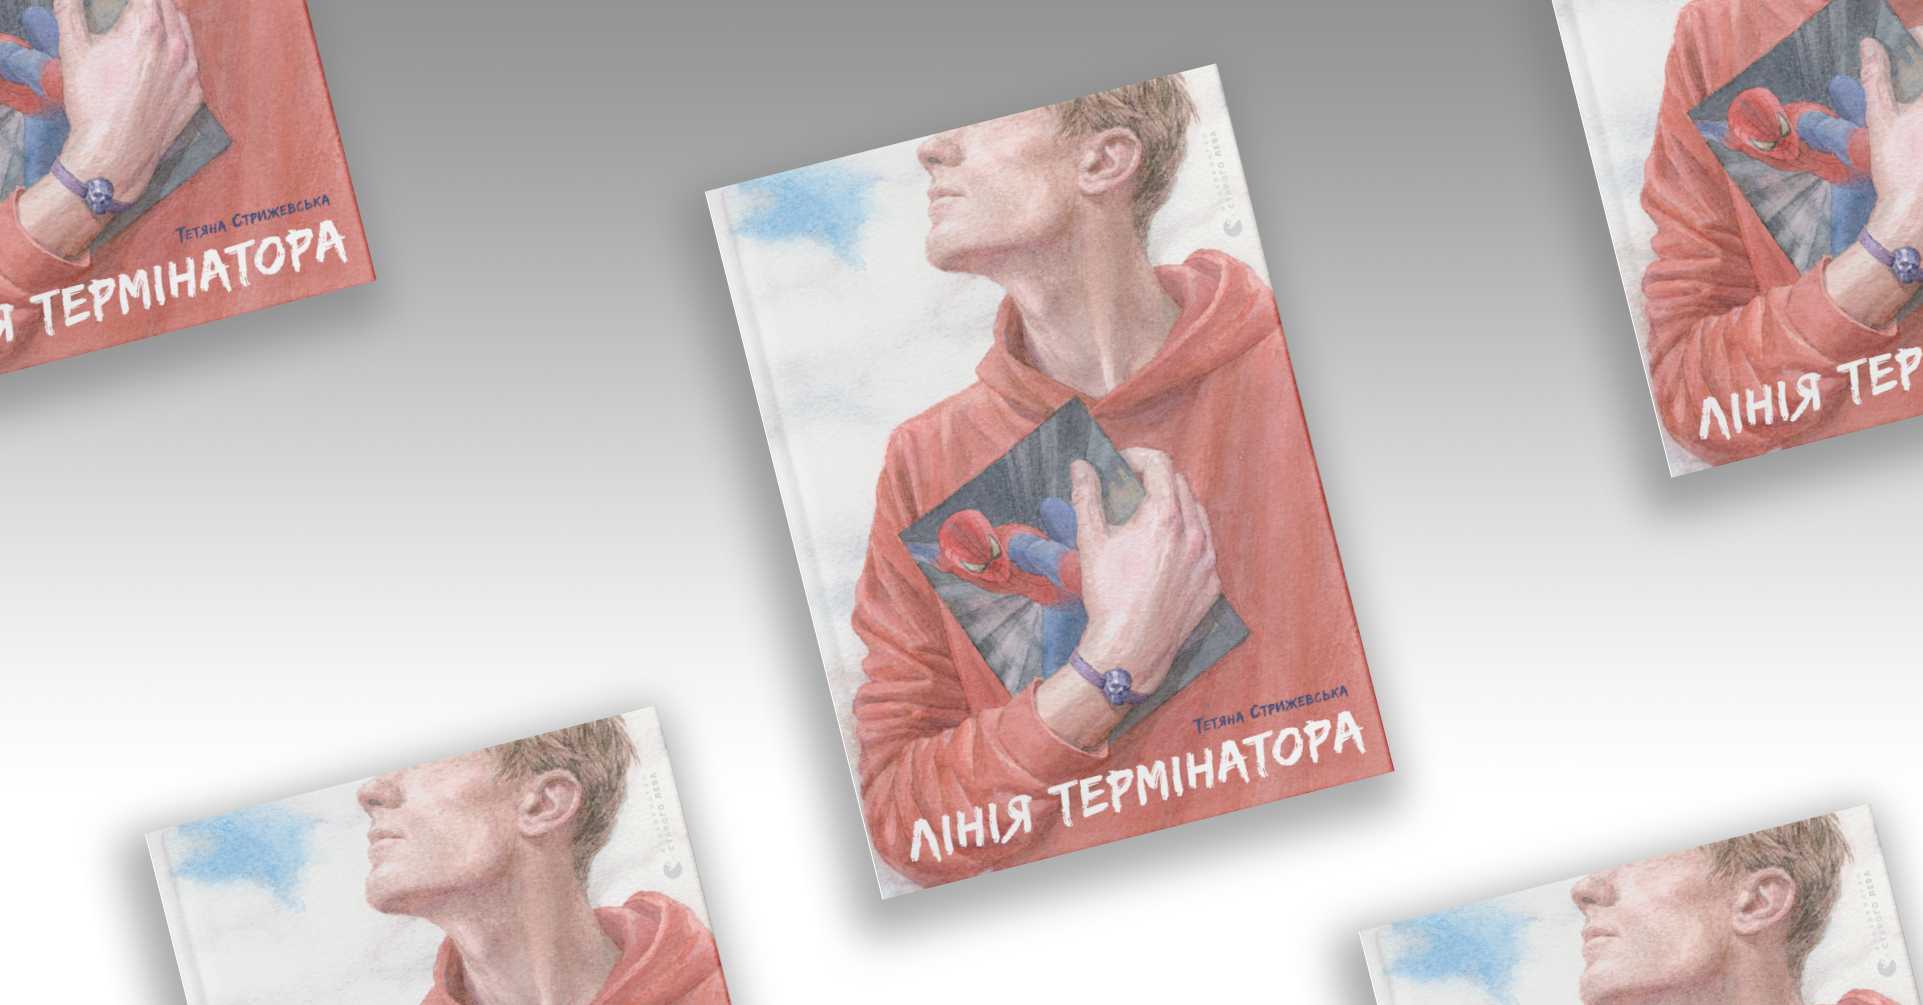 stryzhevska cover - Фрагмент із книжки «Лінія термінатора» Тетяни Стрижевської